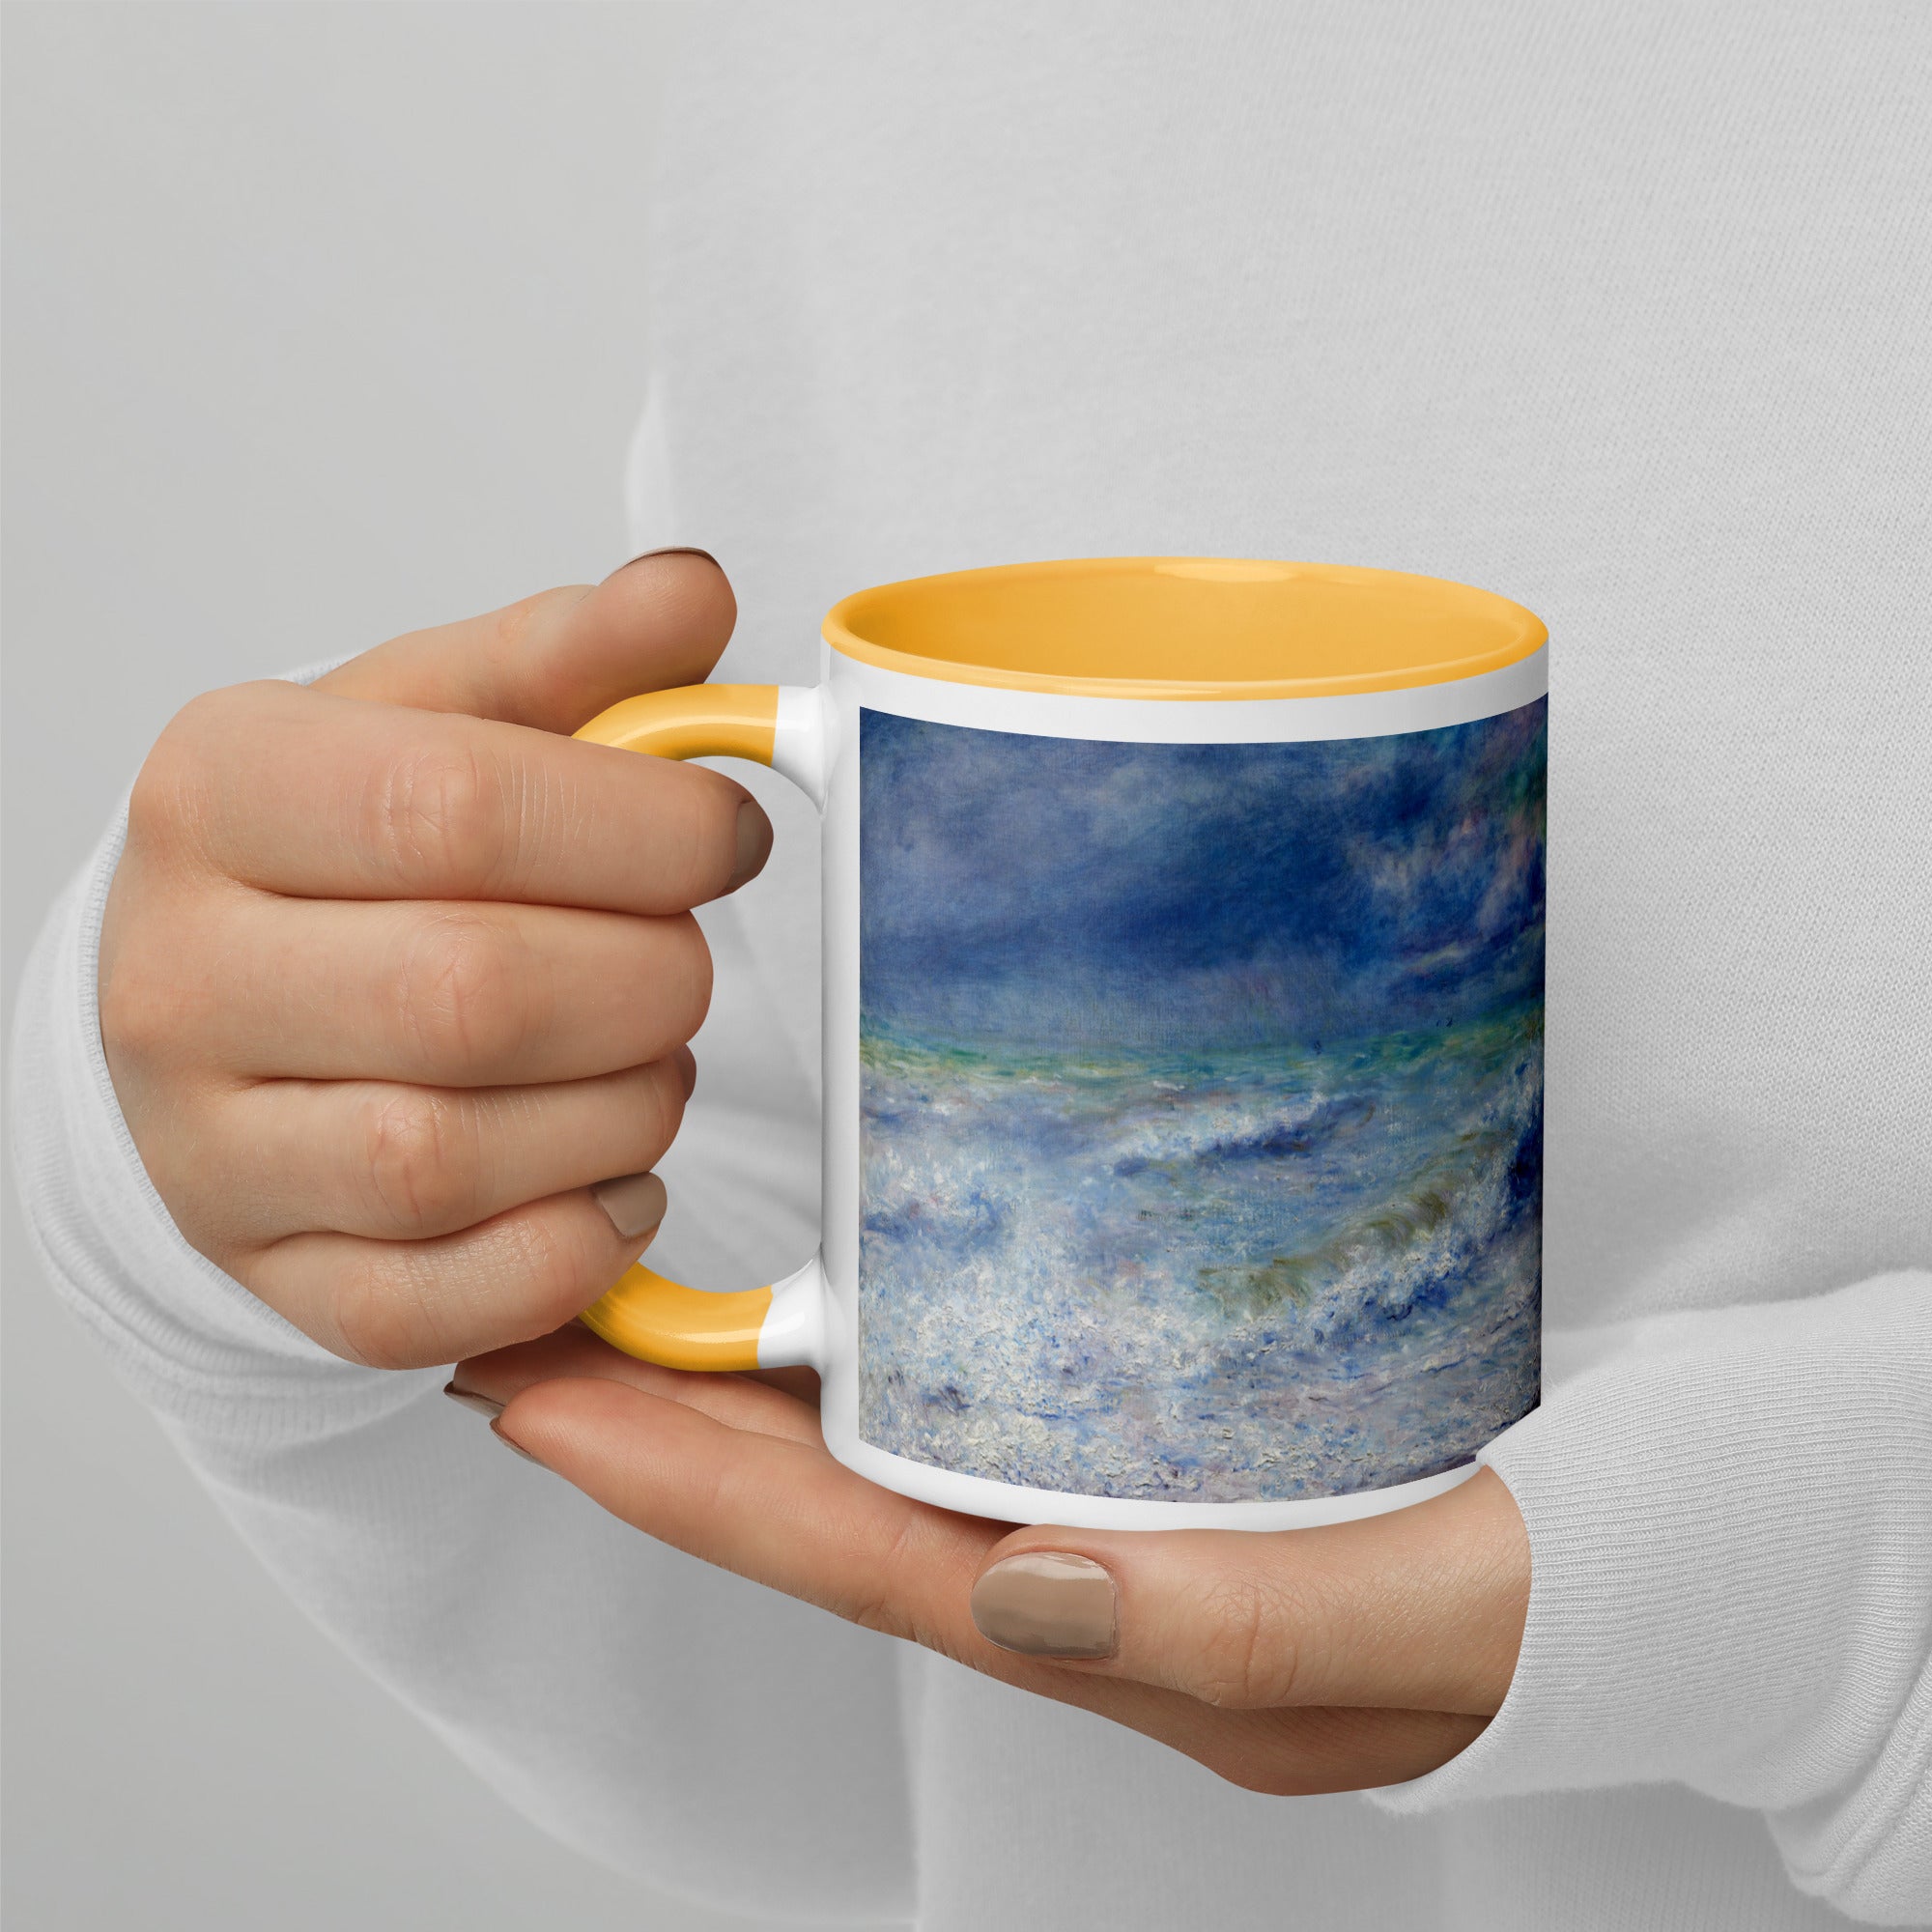 Pierre-Auguste Renoir 'Seascape' Famous Painting Ceramic Mug | Premium Art Mug